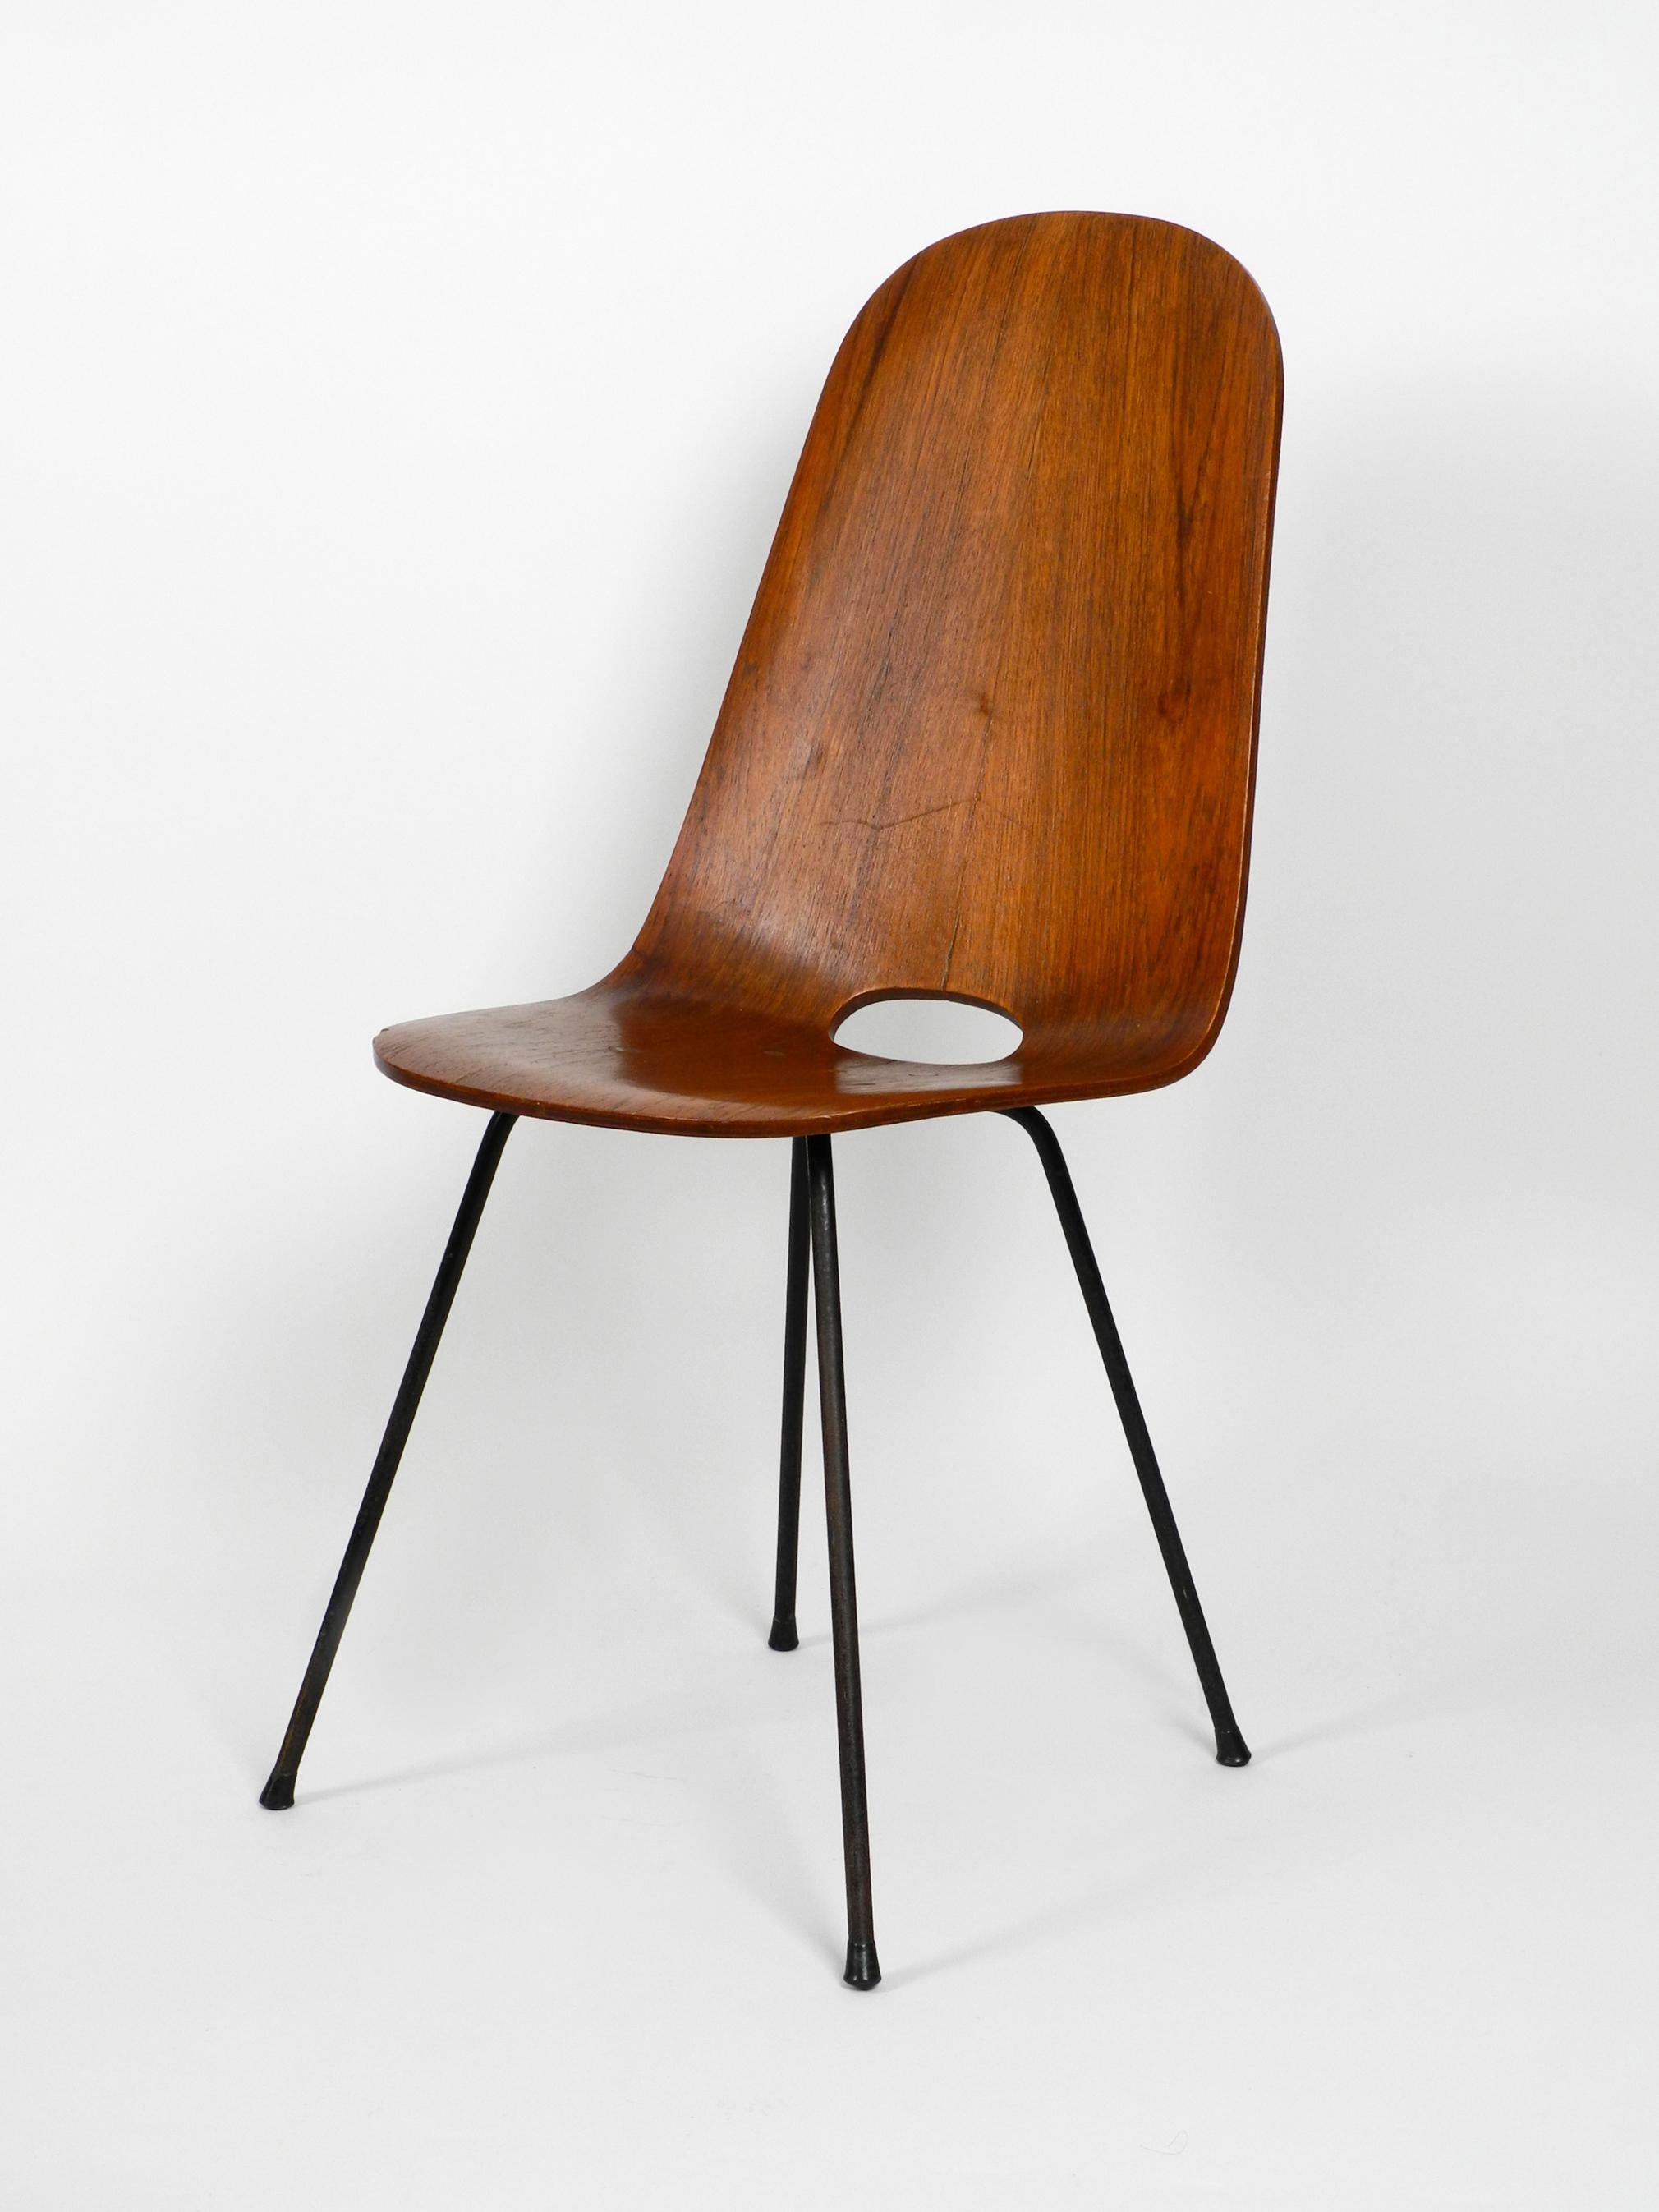 Italian Midcentury Chair by Vittorio Nobili Made of Plywood with Teak Veneer 3